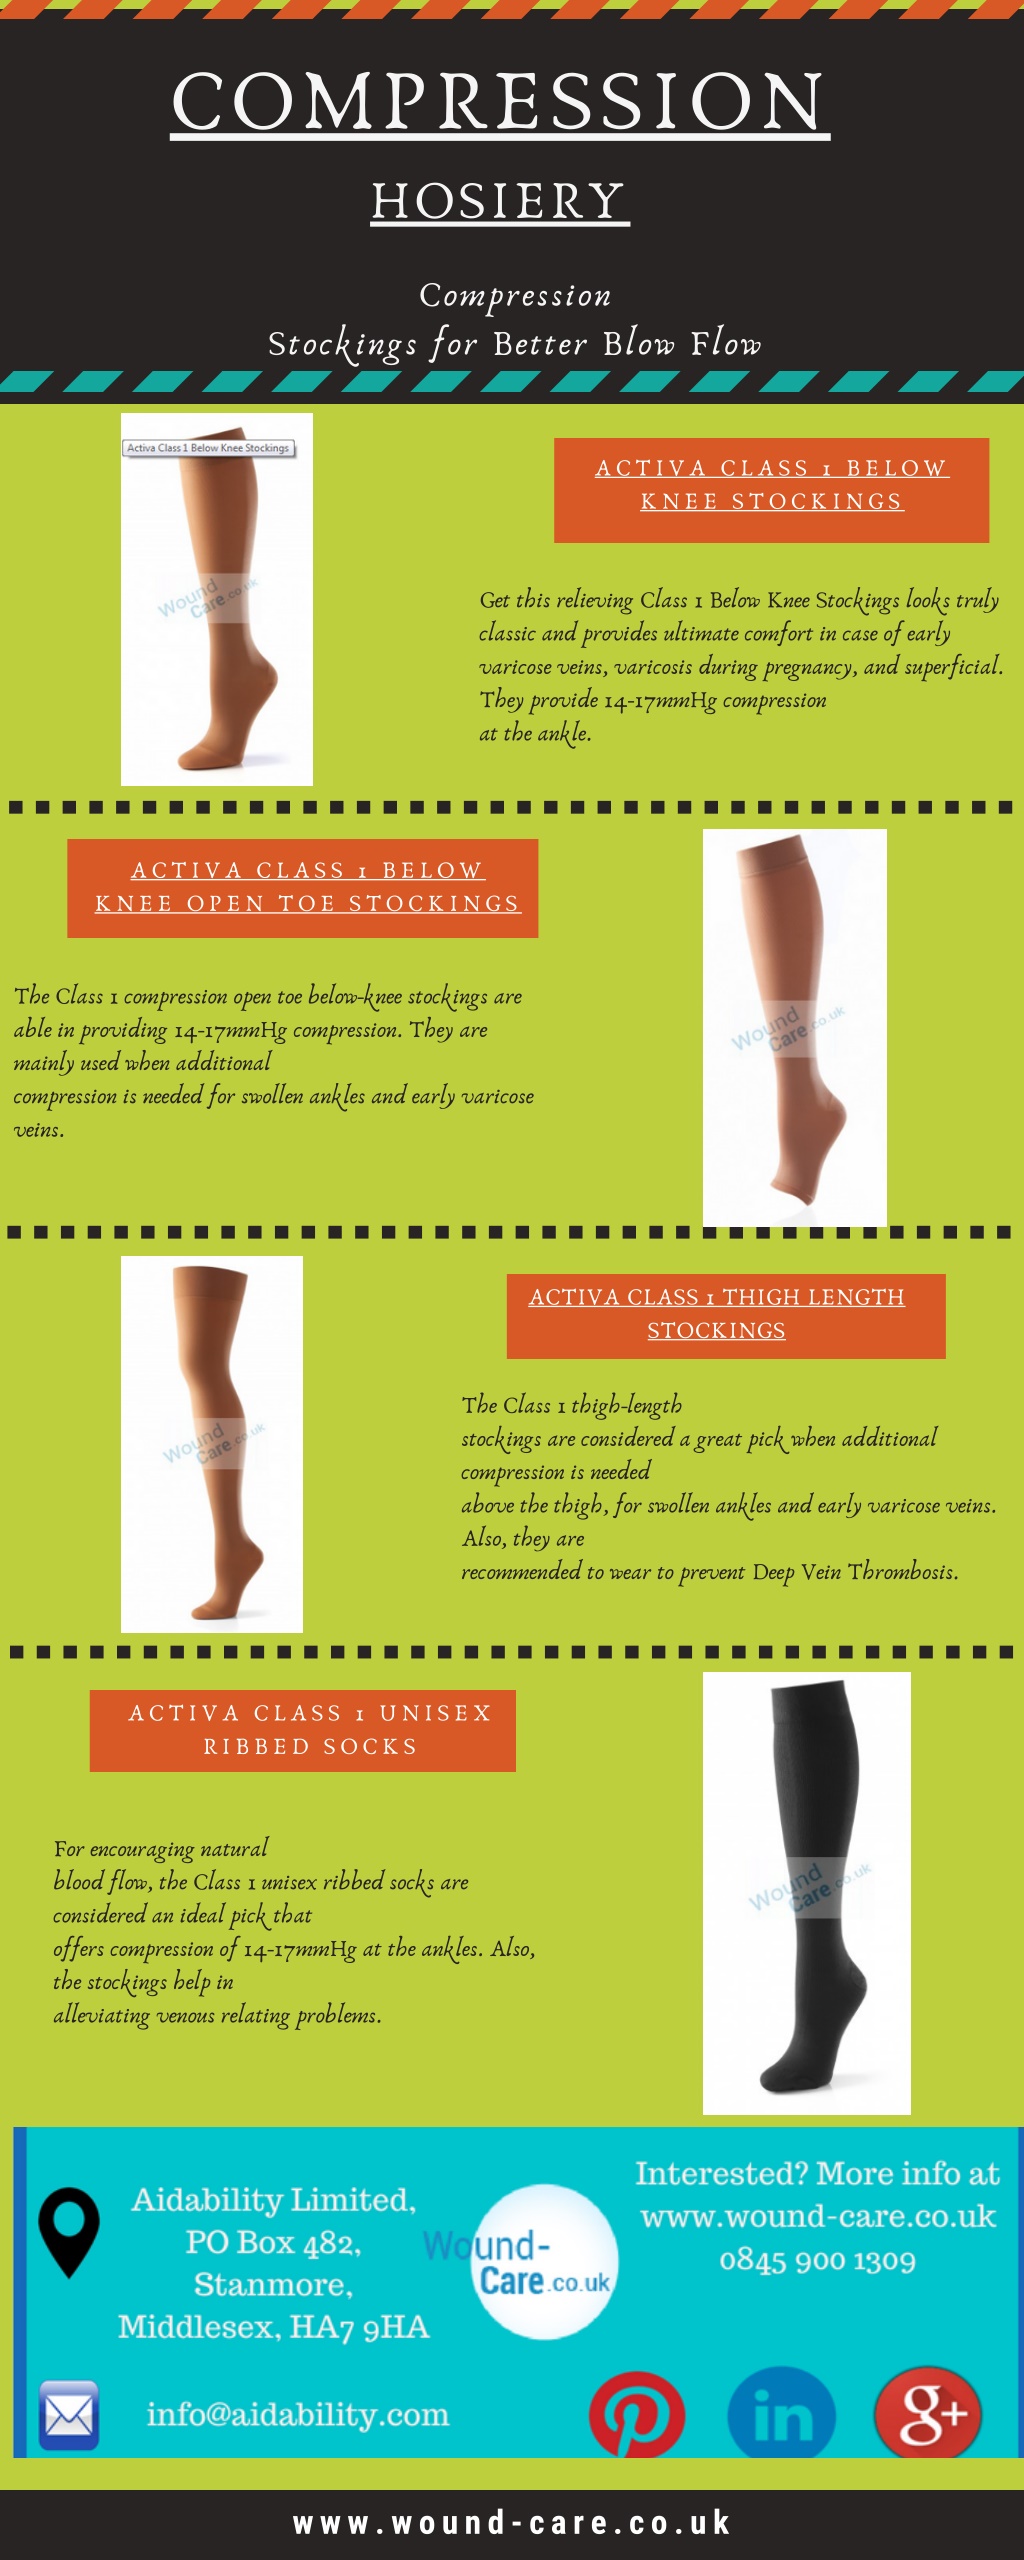 Dr. Comfort® Anti-Embolism Below-Knee Knee High Closed Toe Unisex  Compression Stocking